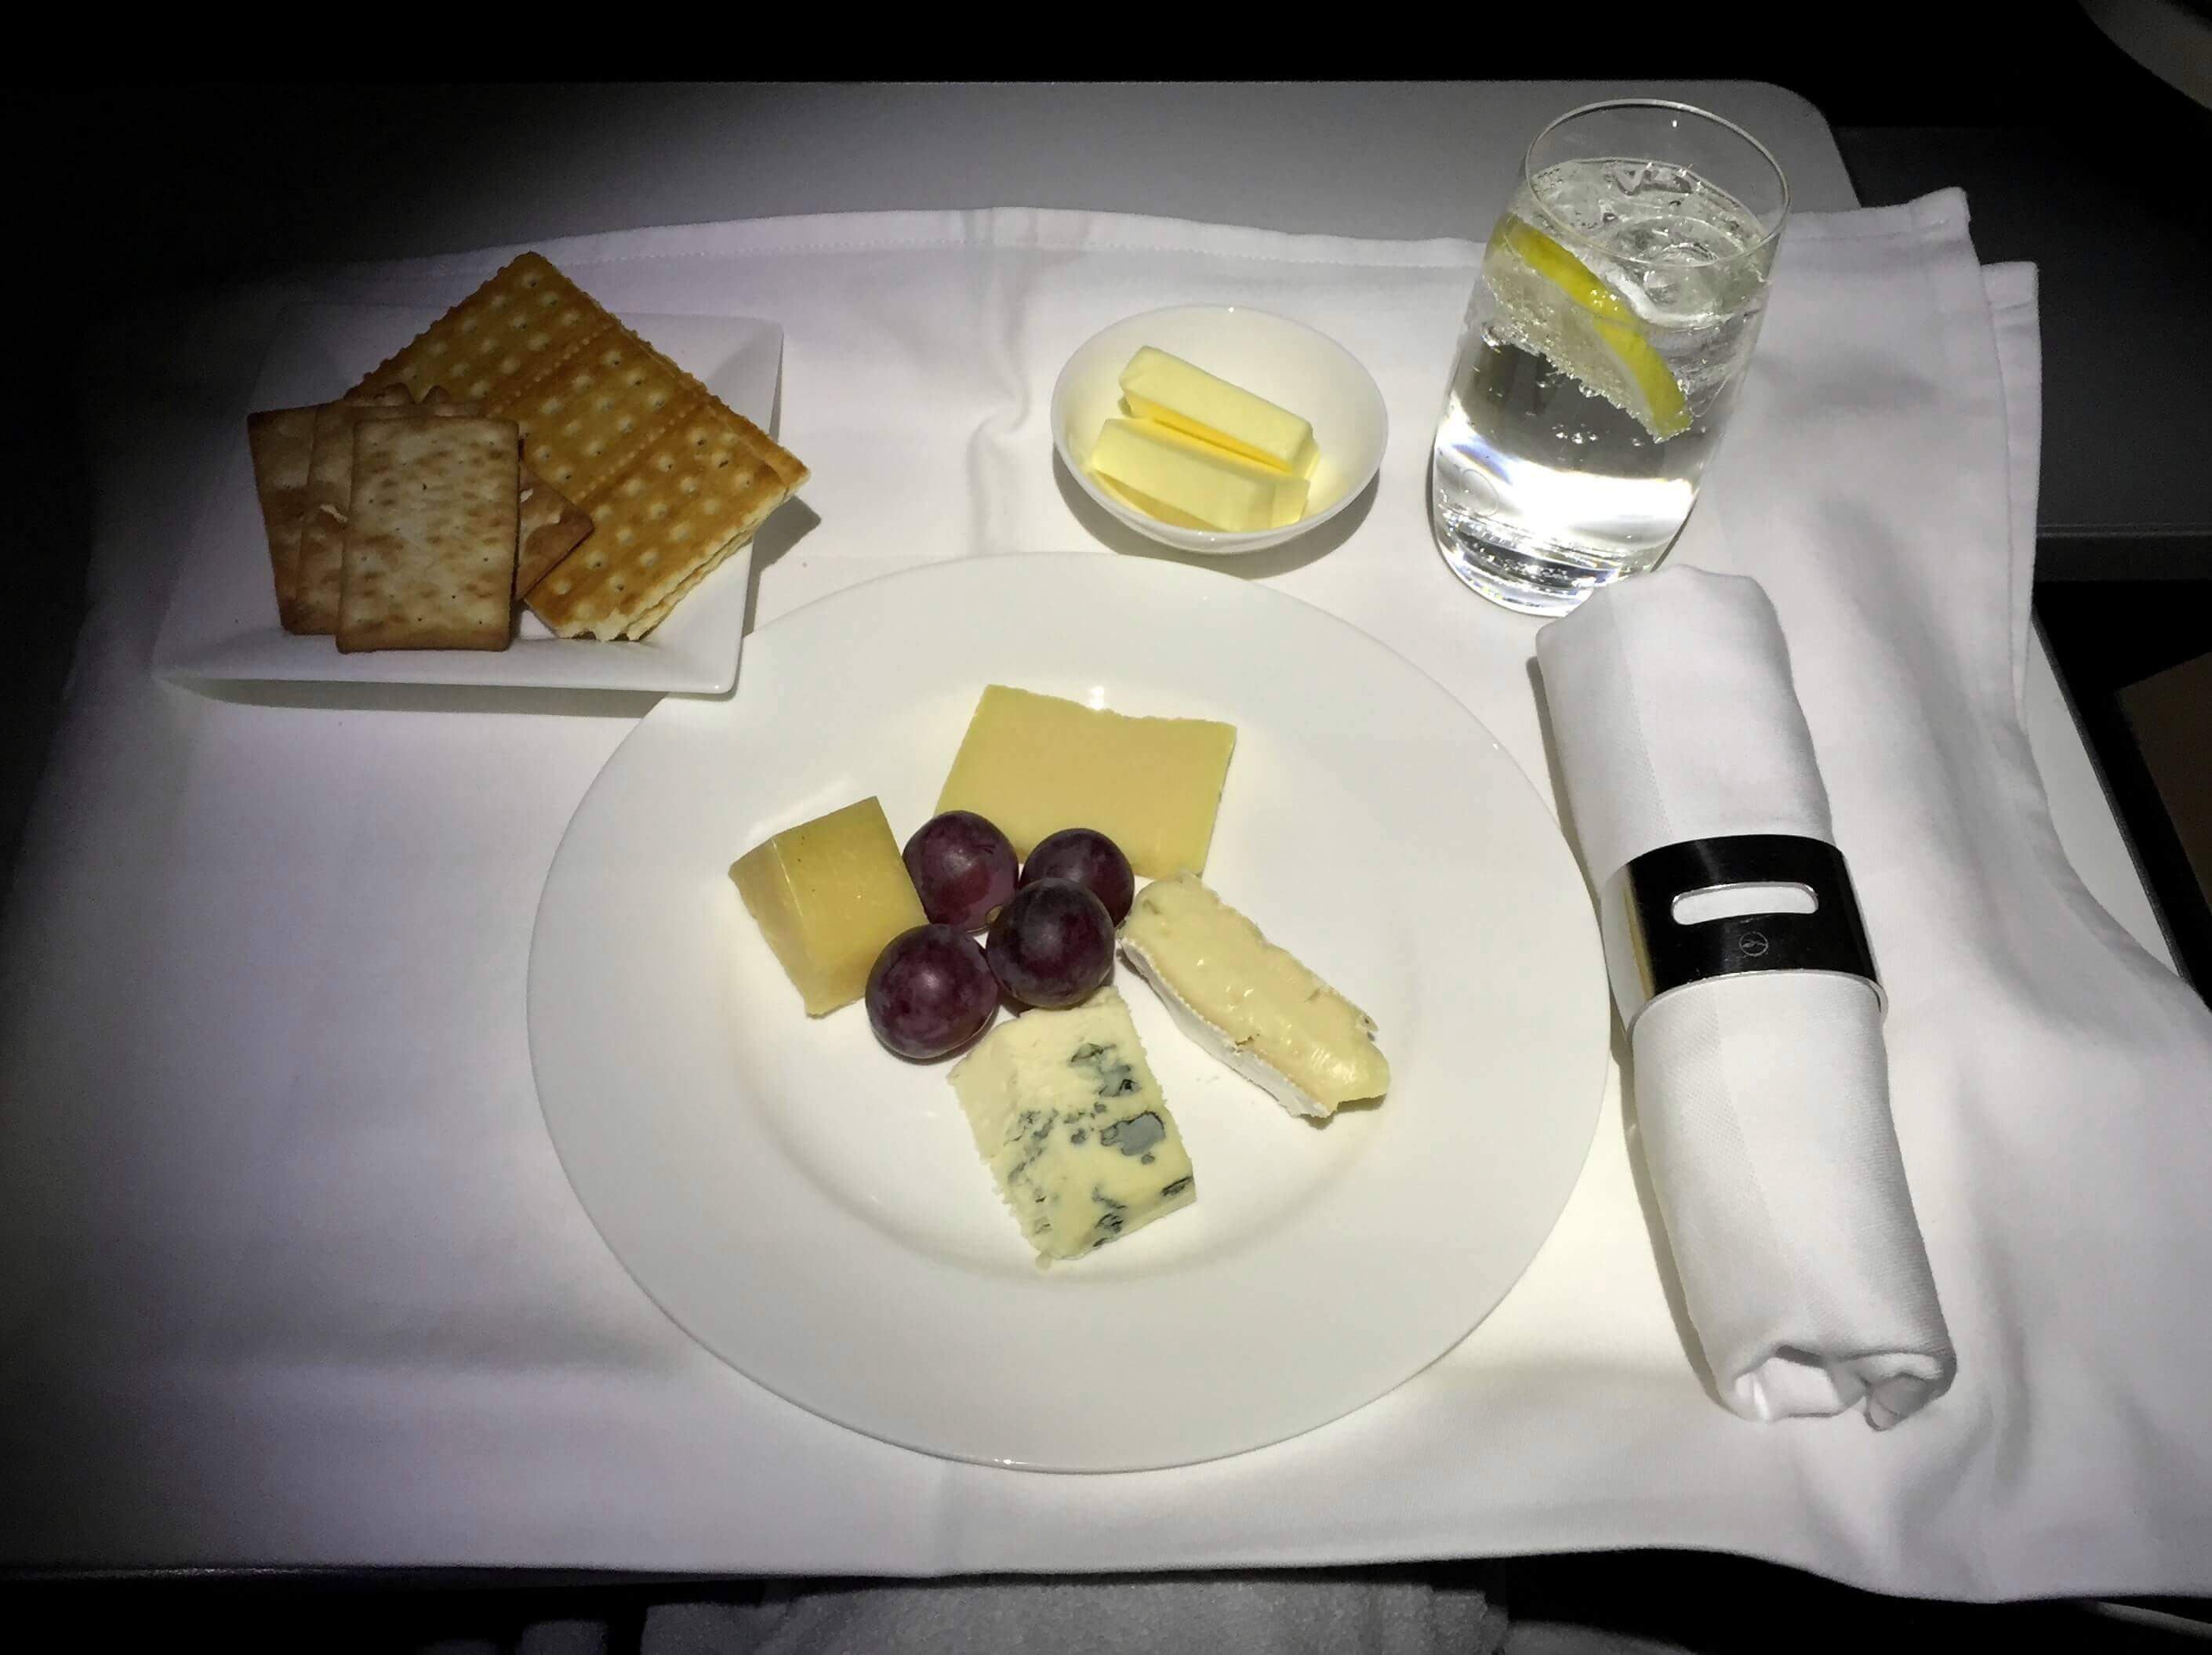 Plato de quesos, Lufthansa first class 747-800 Buenos Aires-Frankfurt